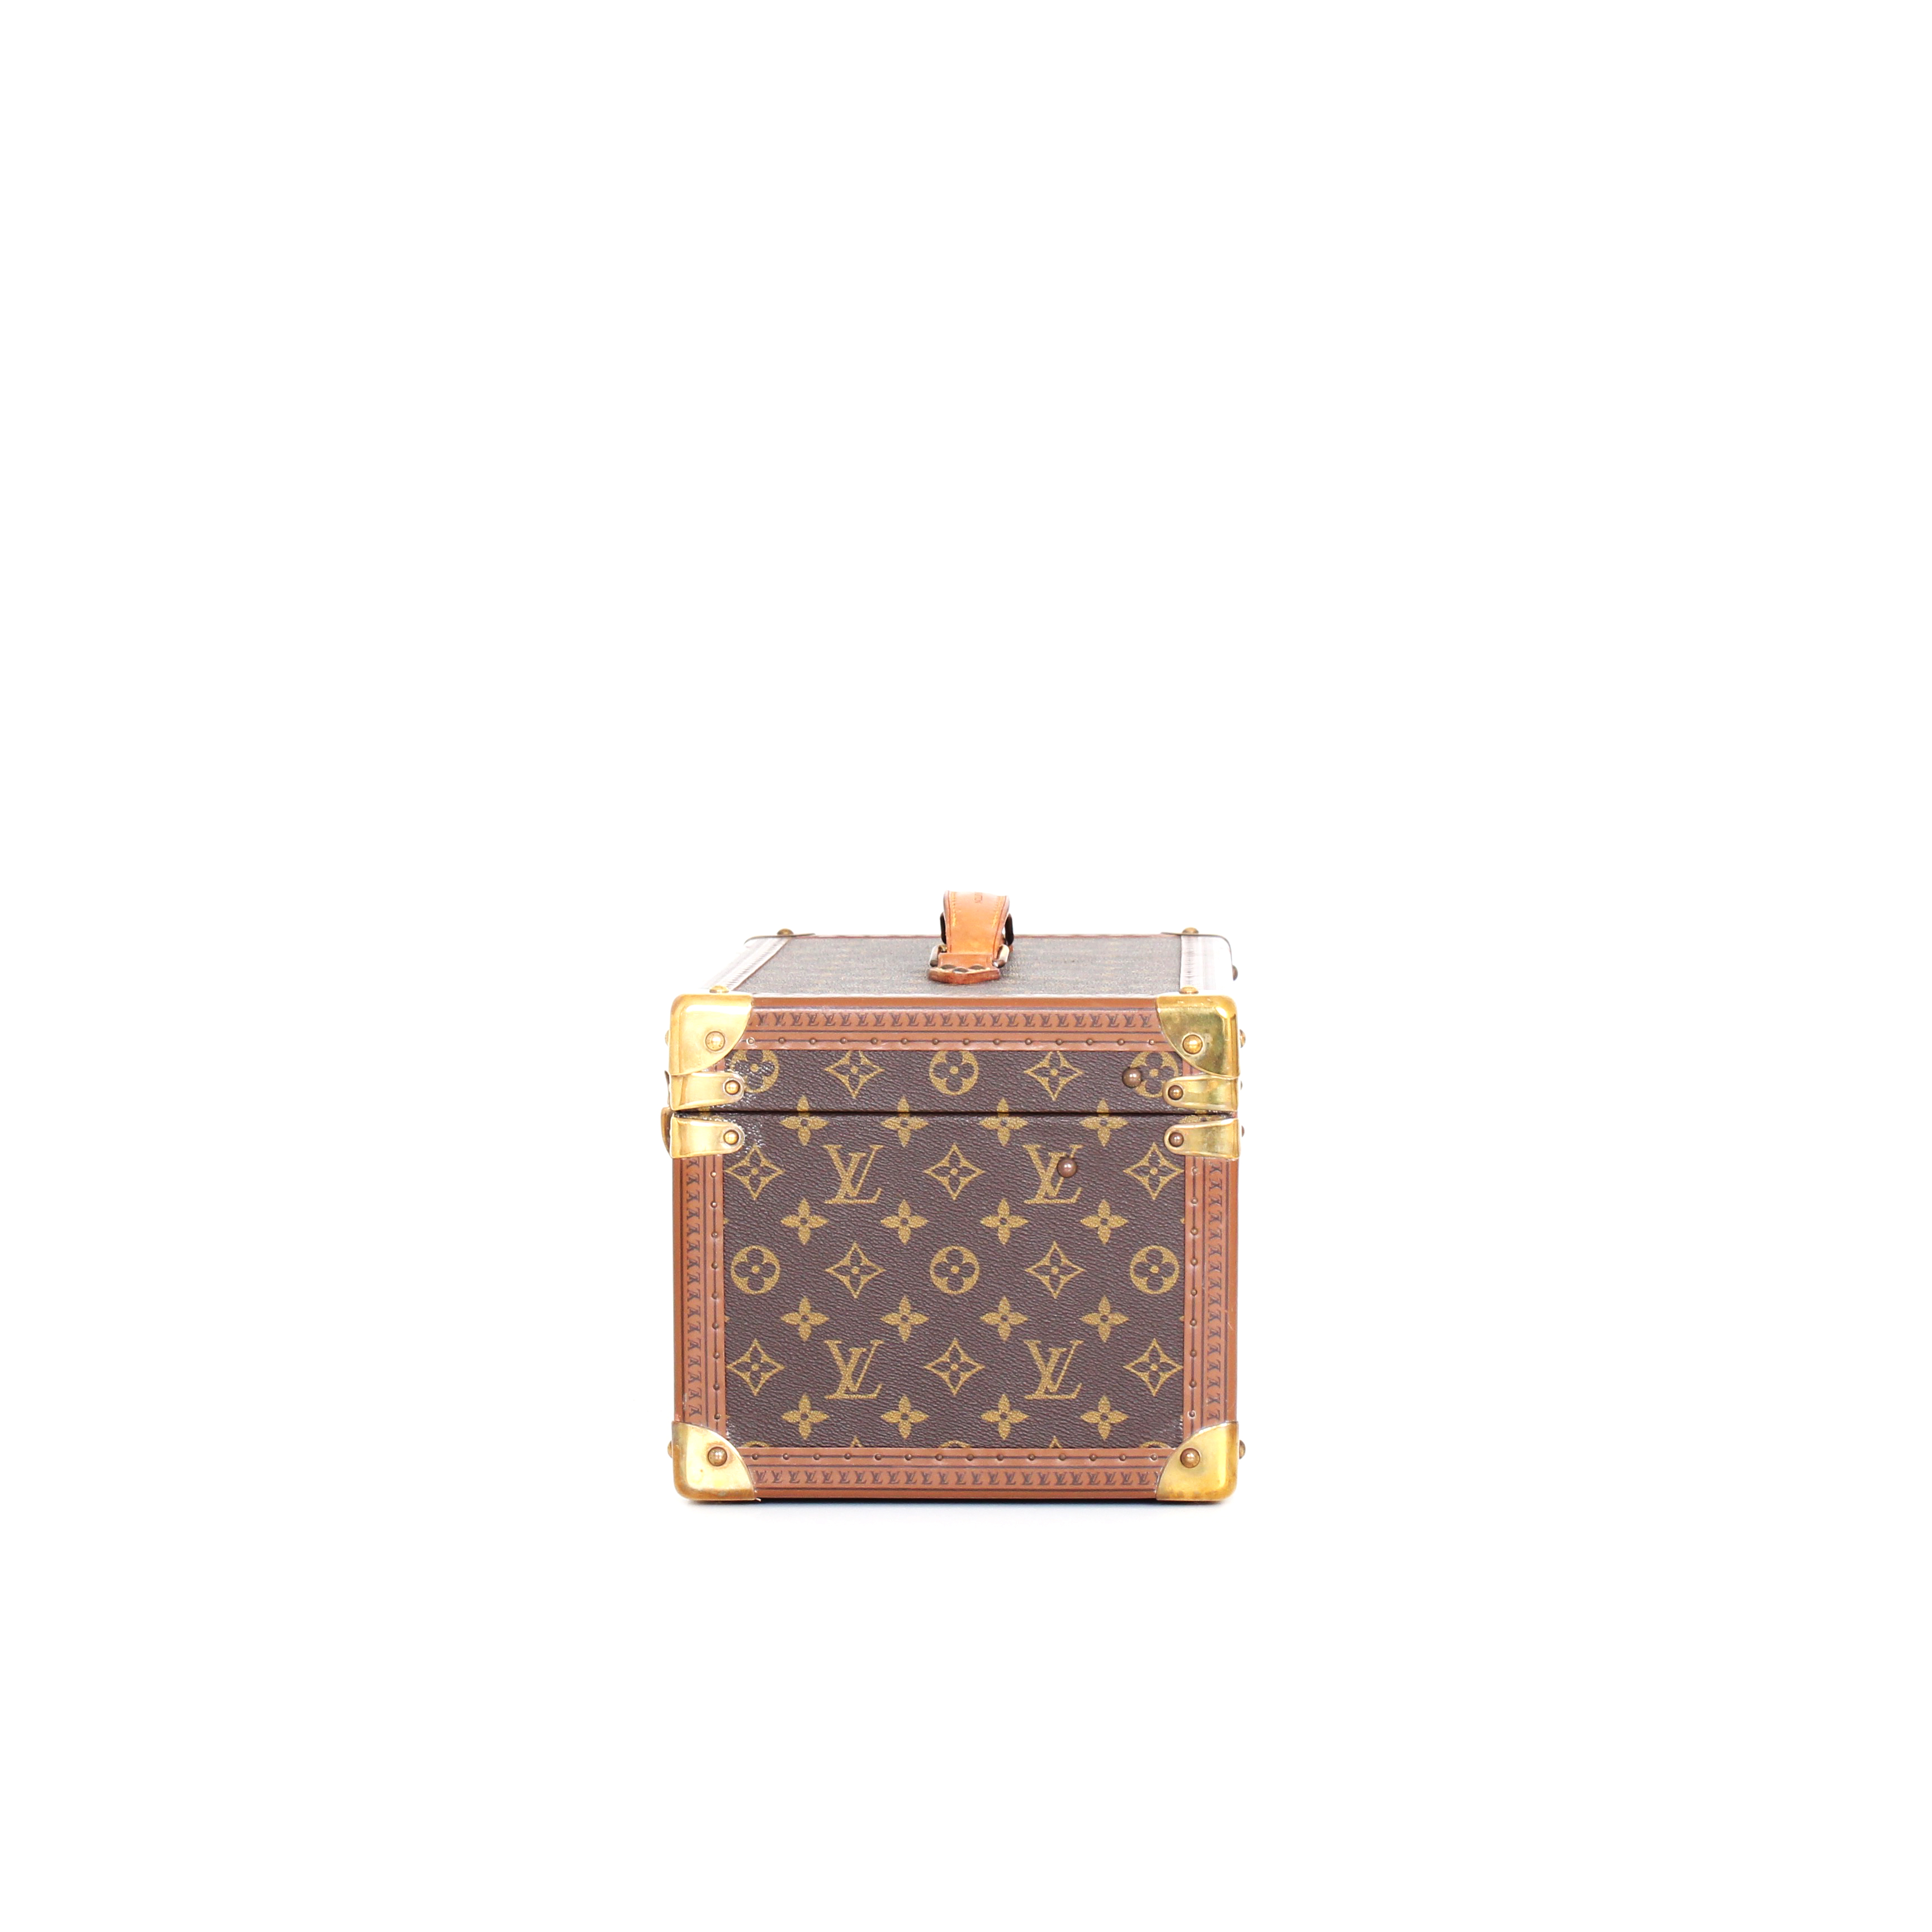 Neceser-cofre Louis Vuitton Vanity Case Monogram I CBL Bags